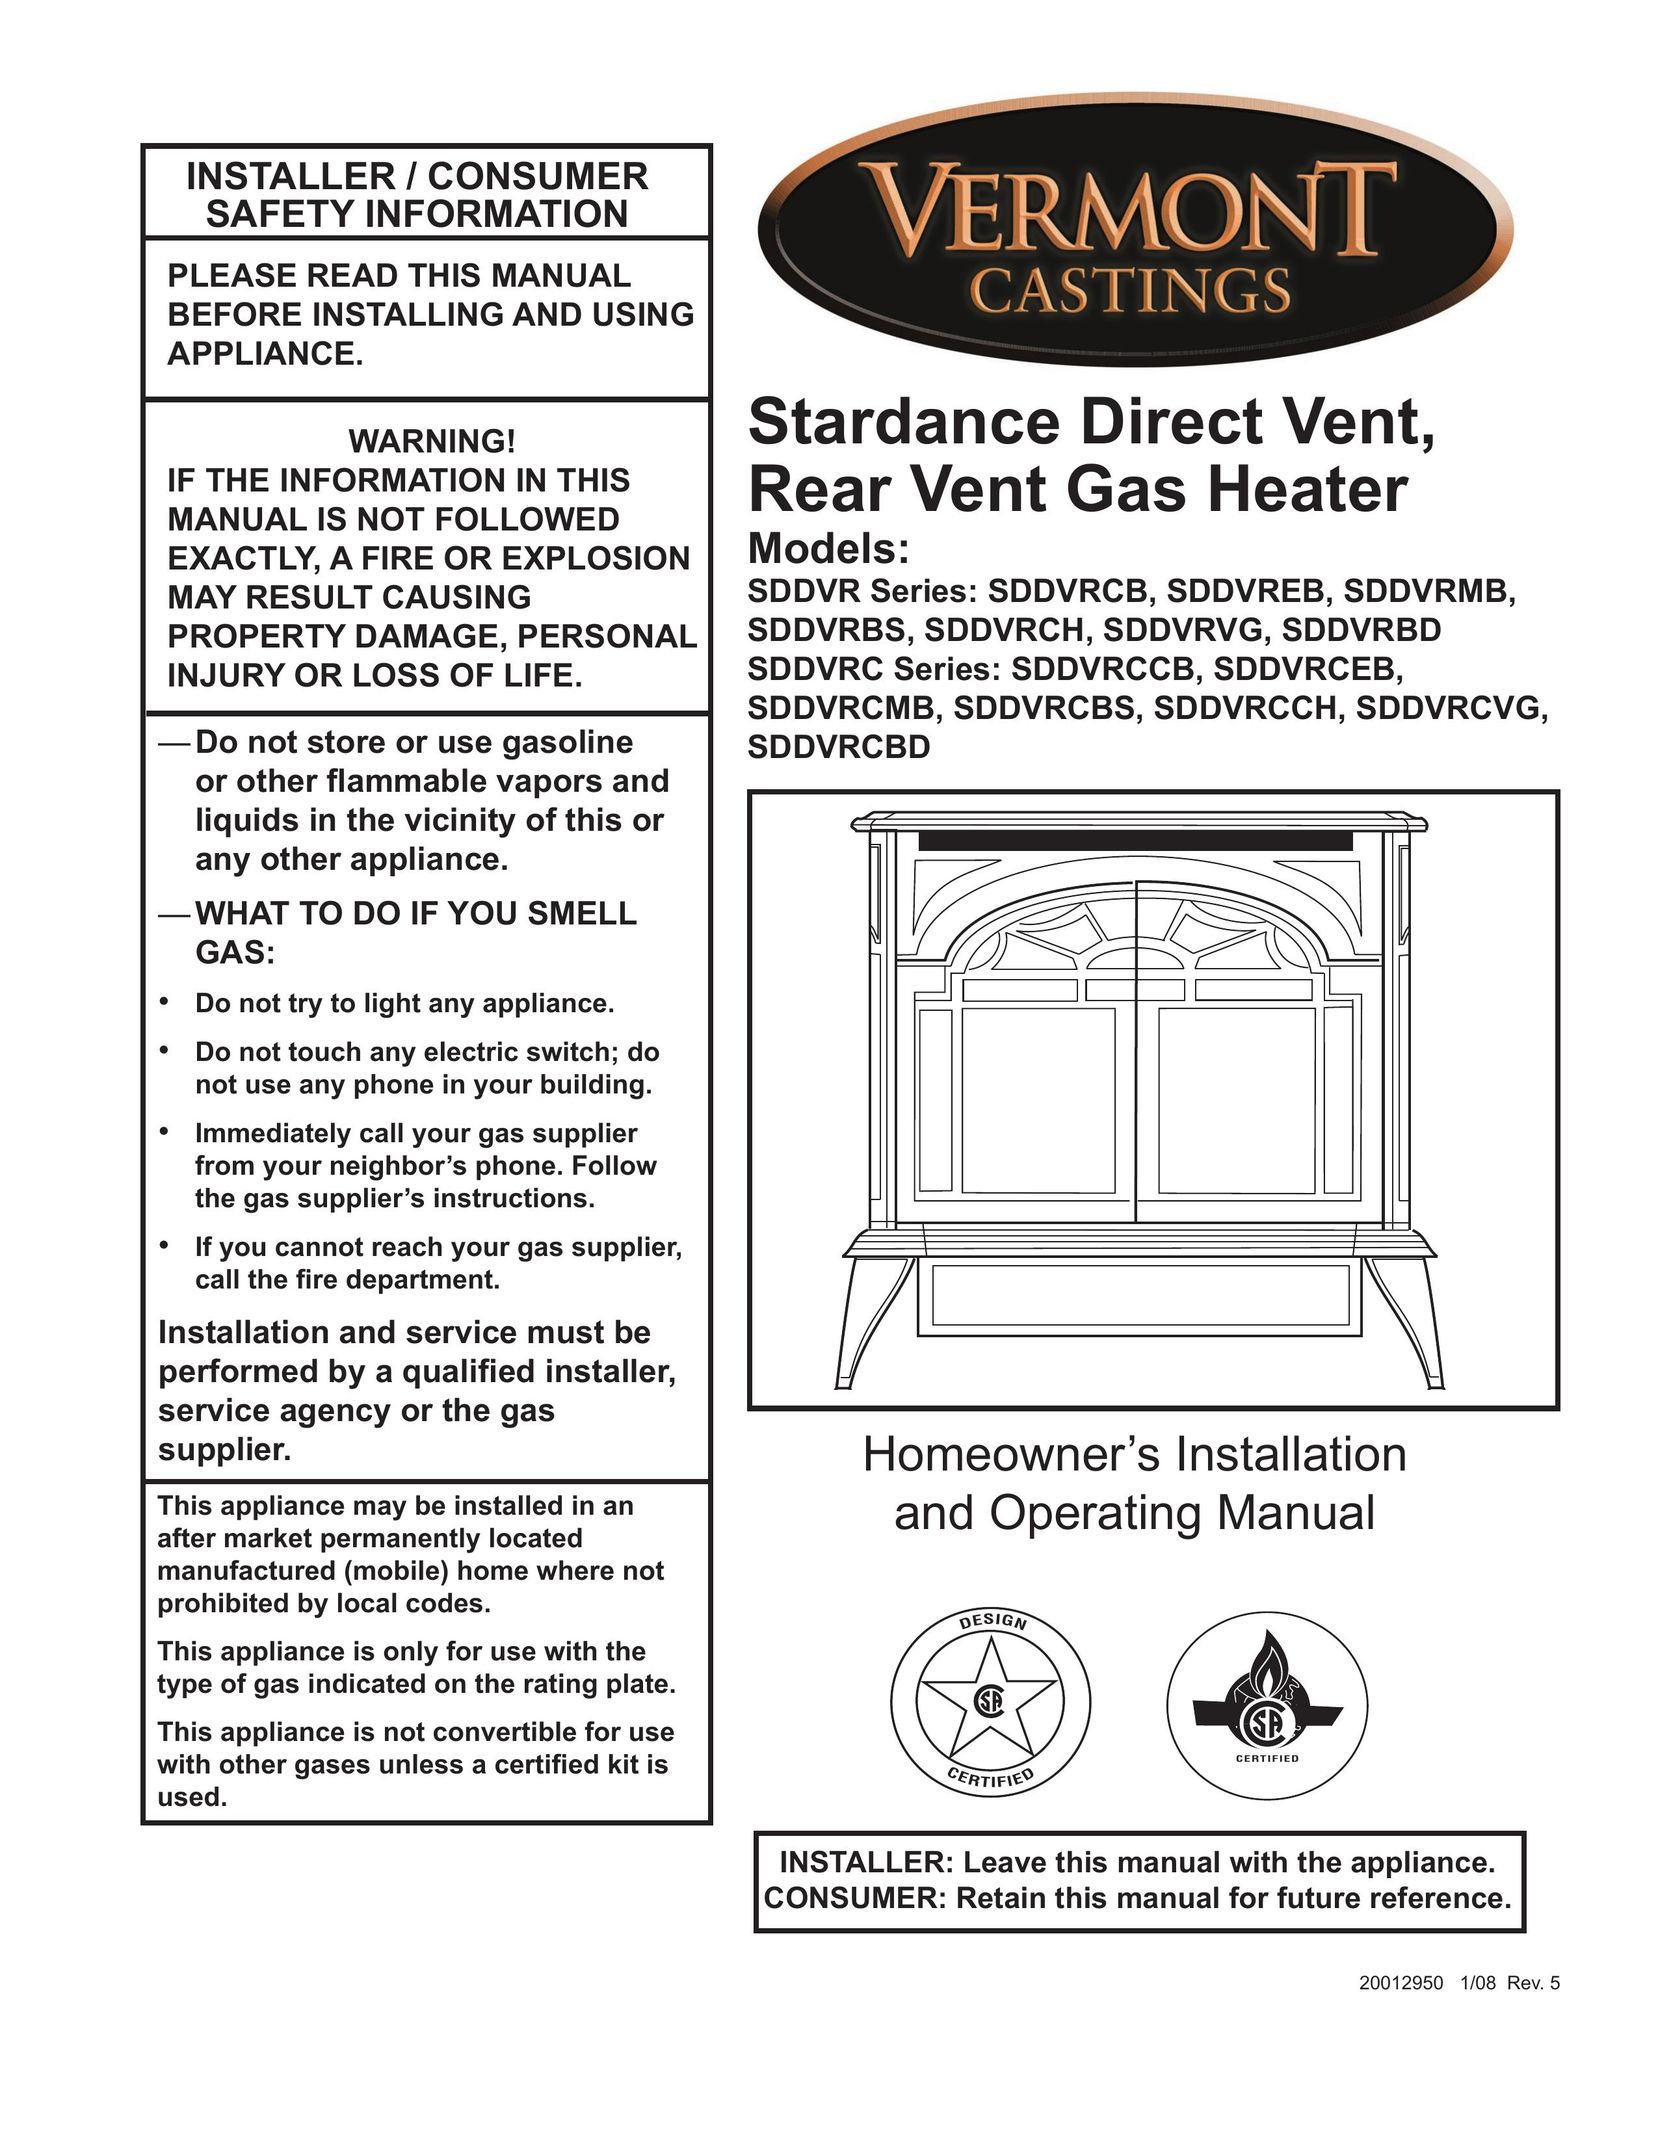 Vermont Casting SDDVRCBD Gas Heater User Manual